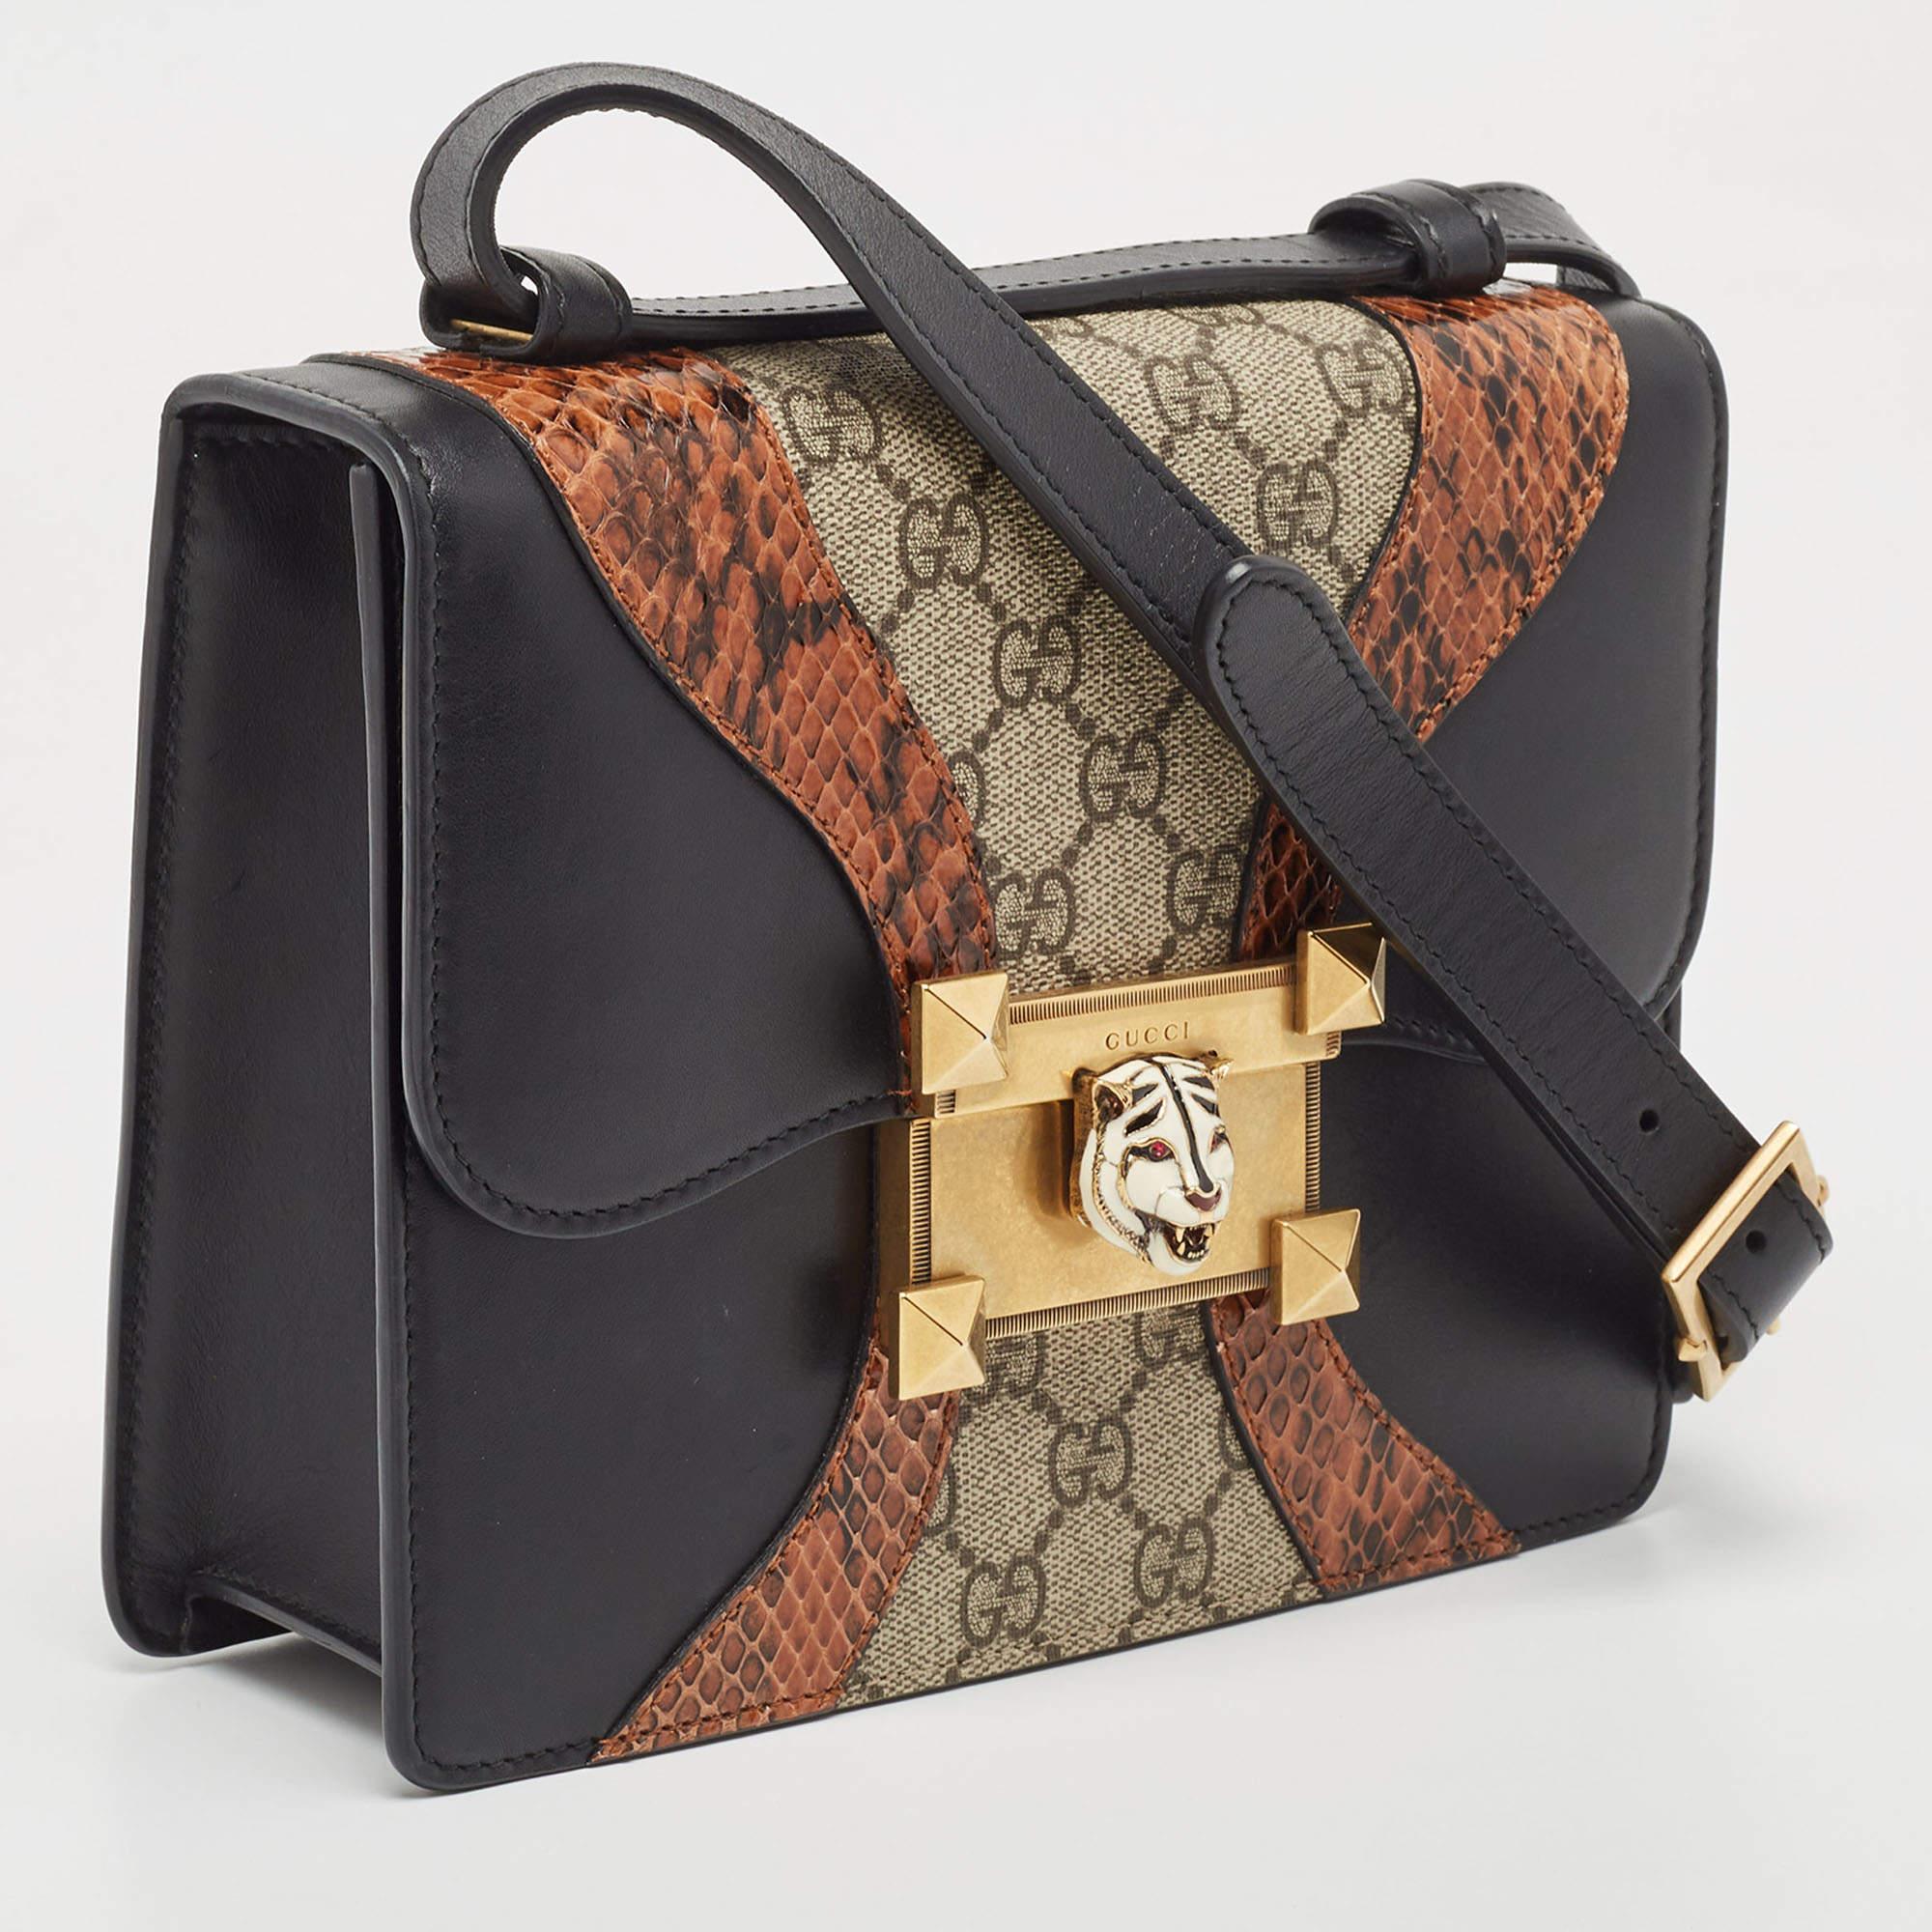 Gucci Multicolor GG Supreme Canvas and Elaphe Medium Osiride Shoulder Bag In Excellent Condition For Sale In Dubai, Al Qouz 2